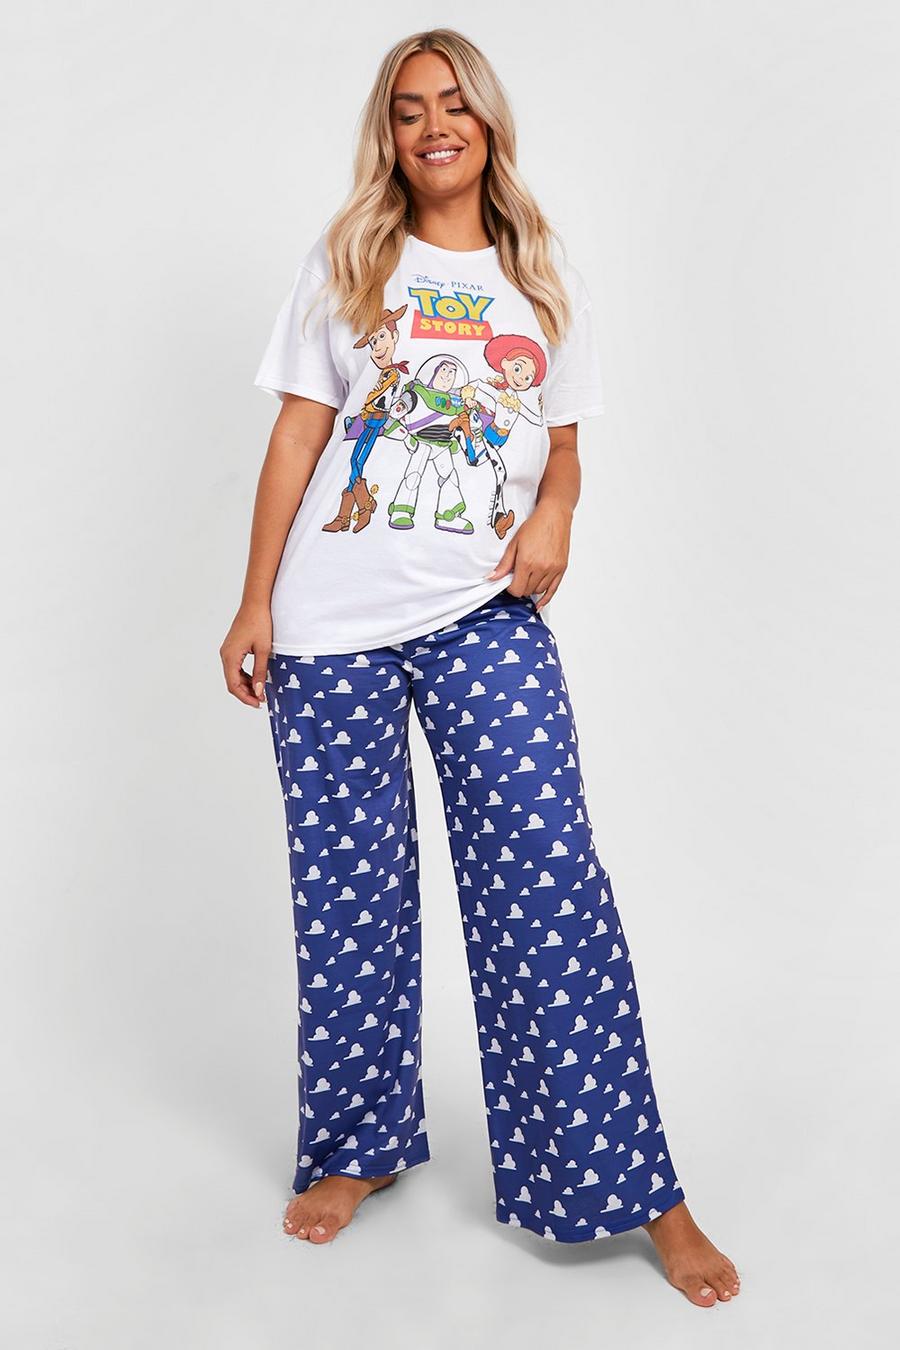 Pijama Plus con estampado de Toy Story, White blanco